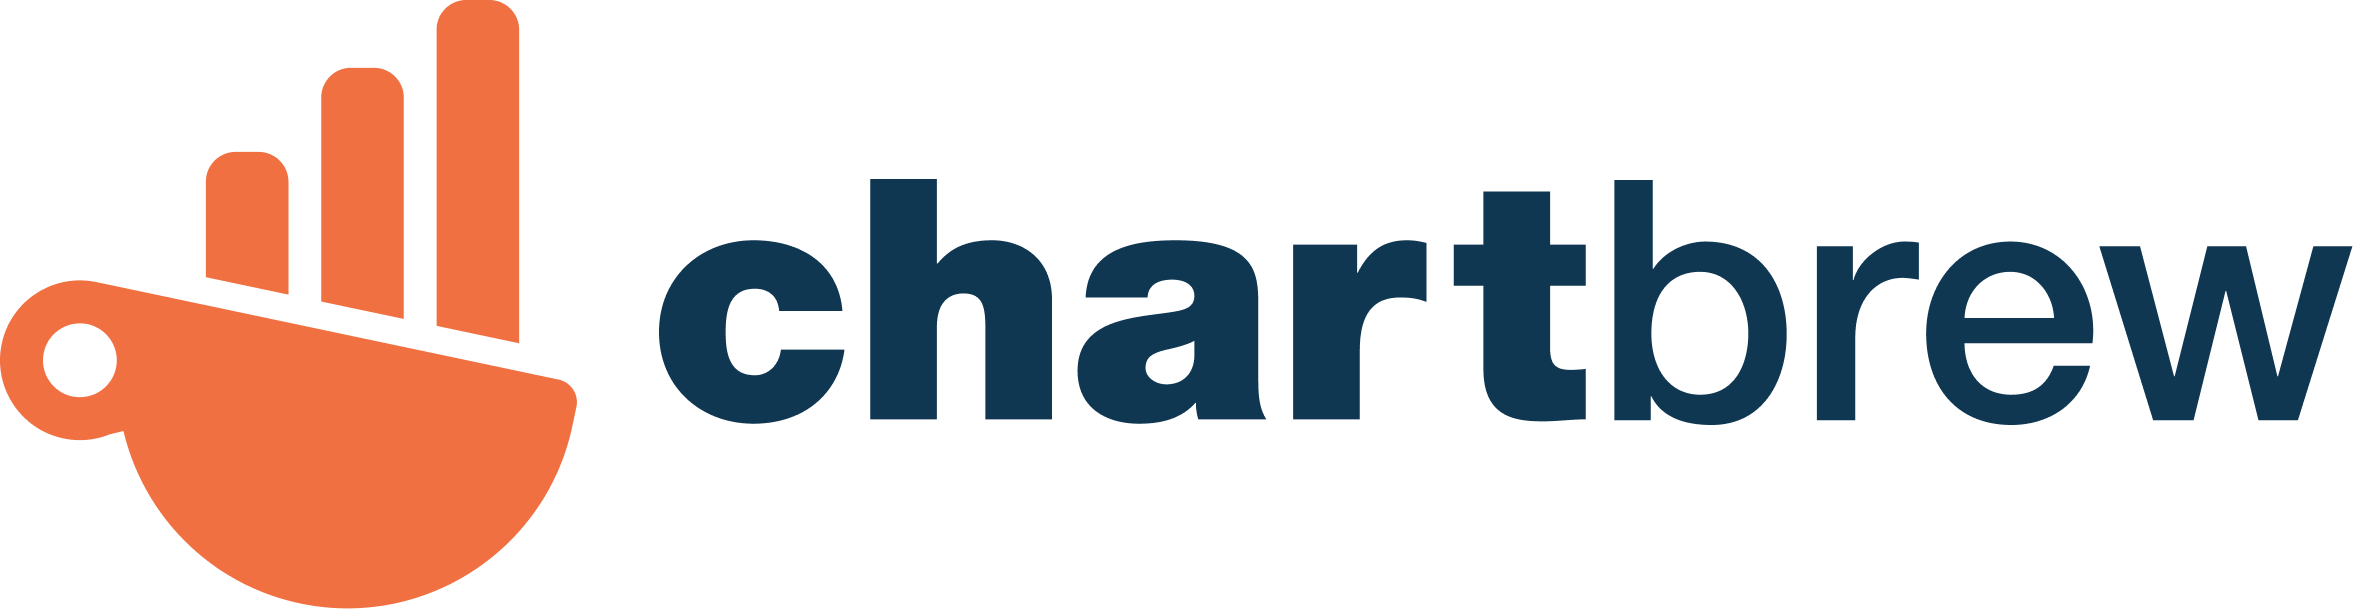 ChartBrew logo